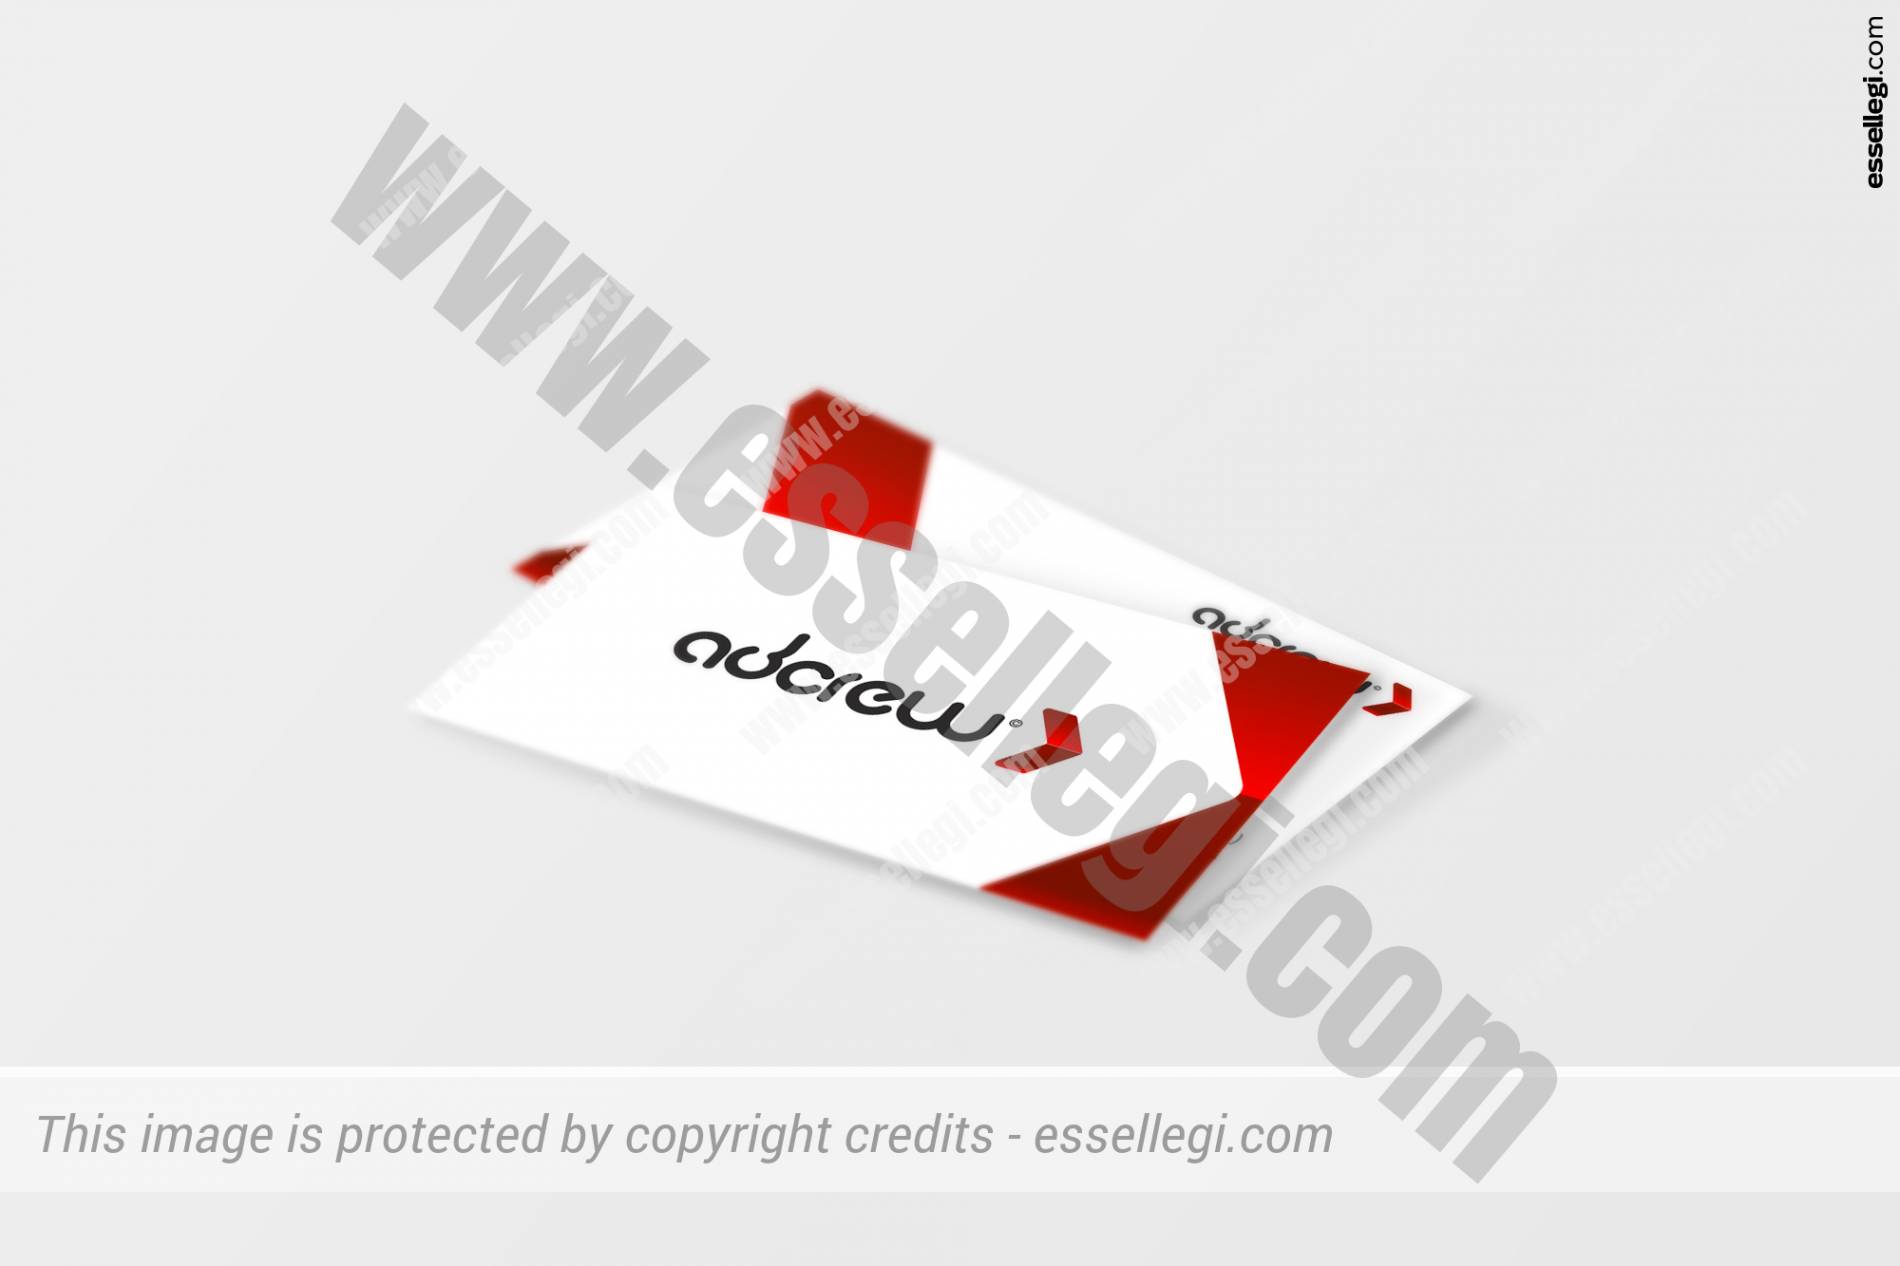 Business Card Design. AdCrew Advertising Marketing Agency Brand Identity Design by Essellegi Design